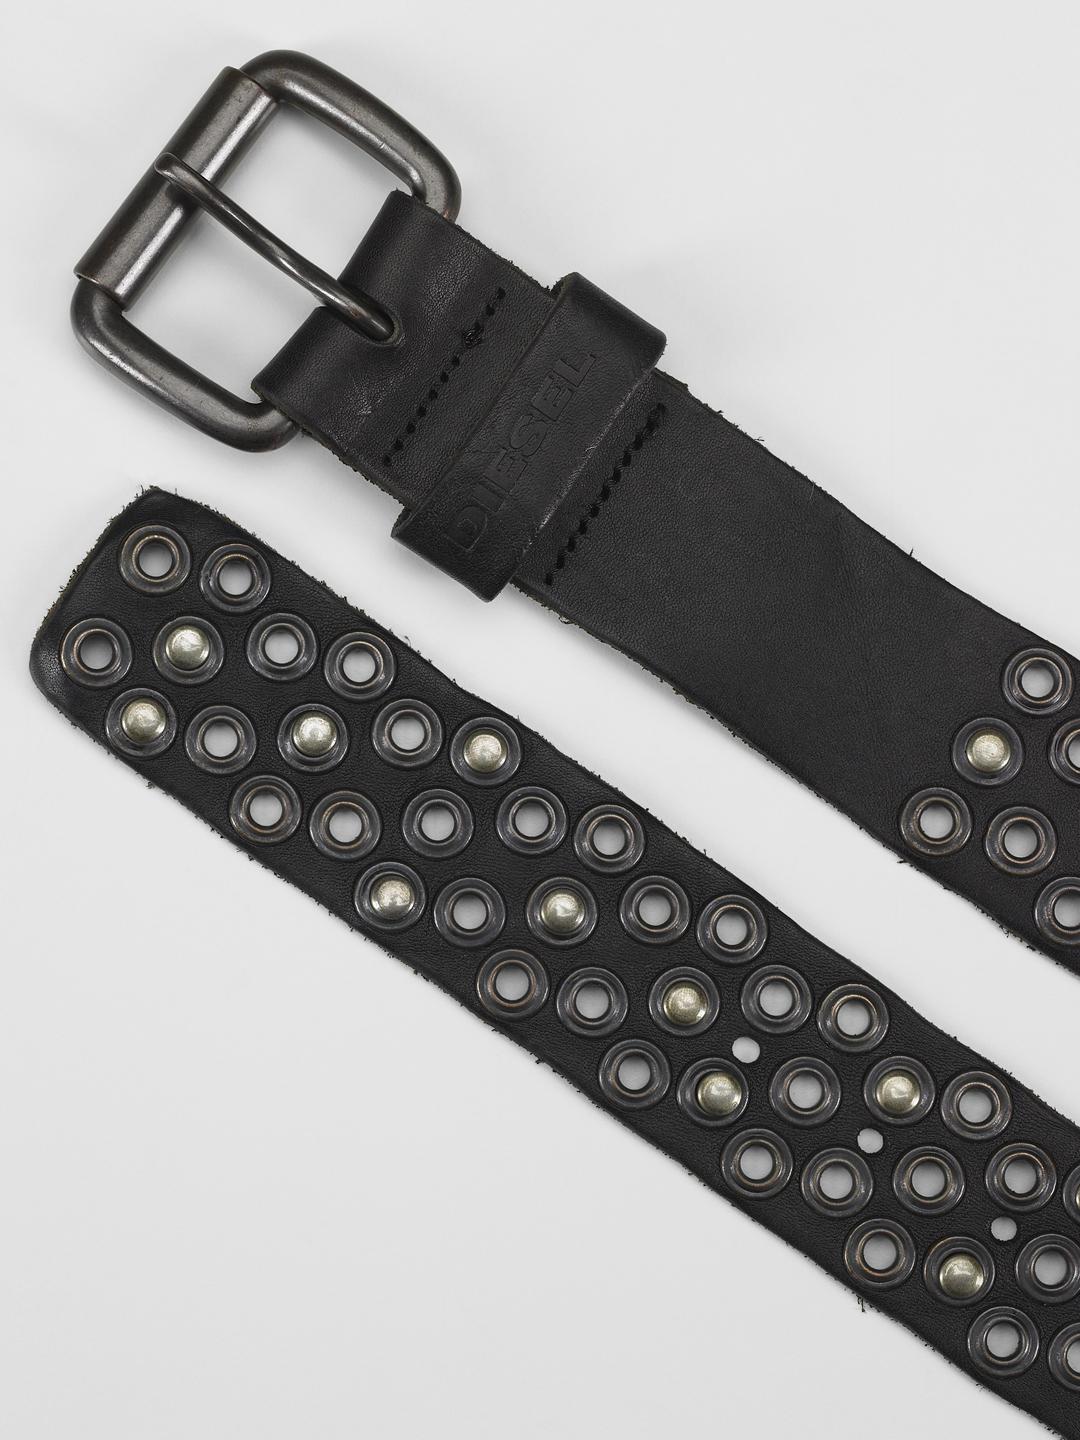 DIESEL Leather Stud And Grommet Belt in Black for Men - Lyst